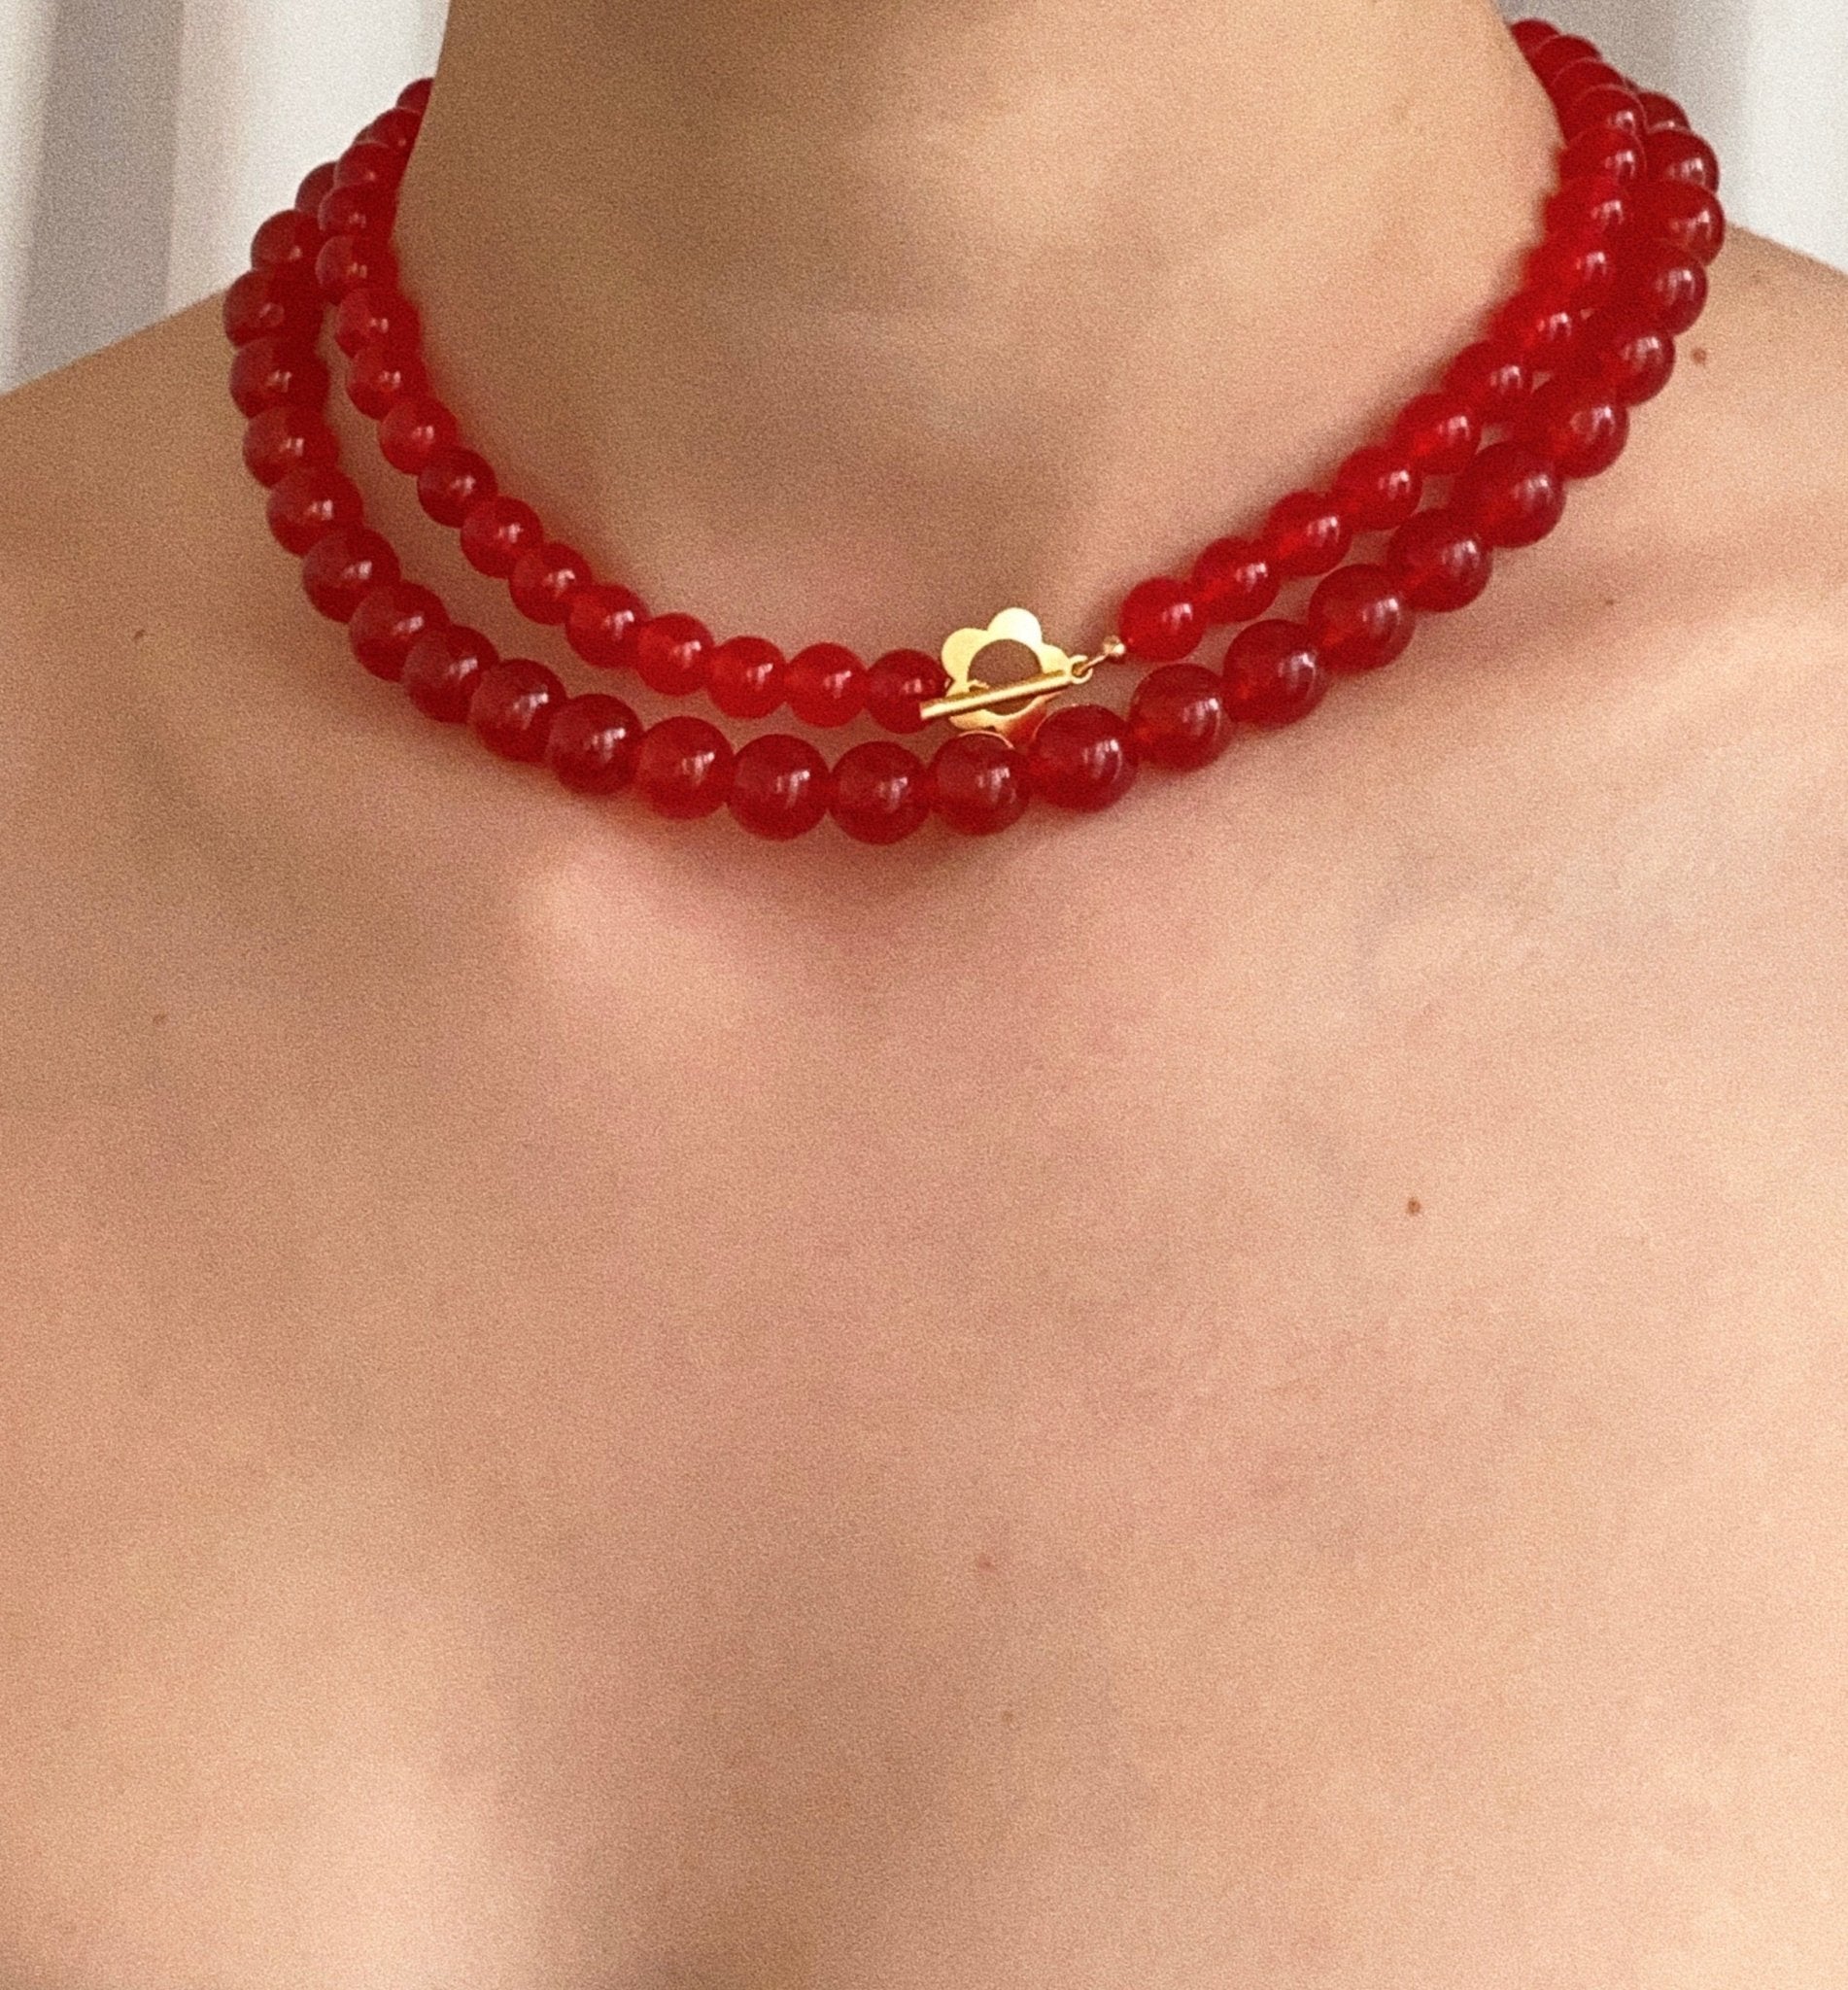 Ciliegia Jade Necklace - iriss studio - necklaces